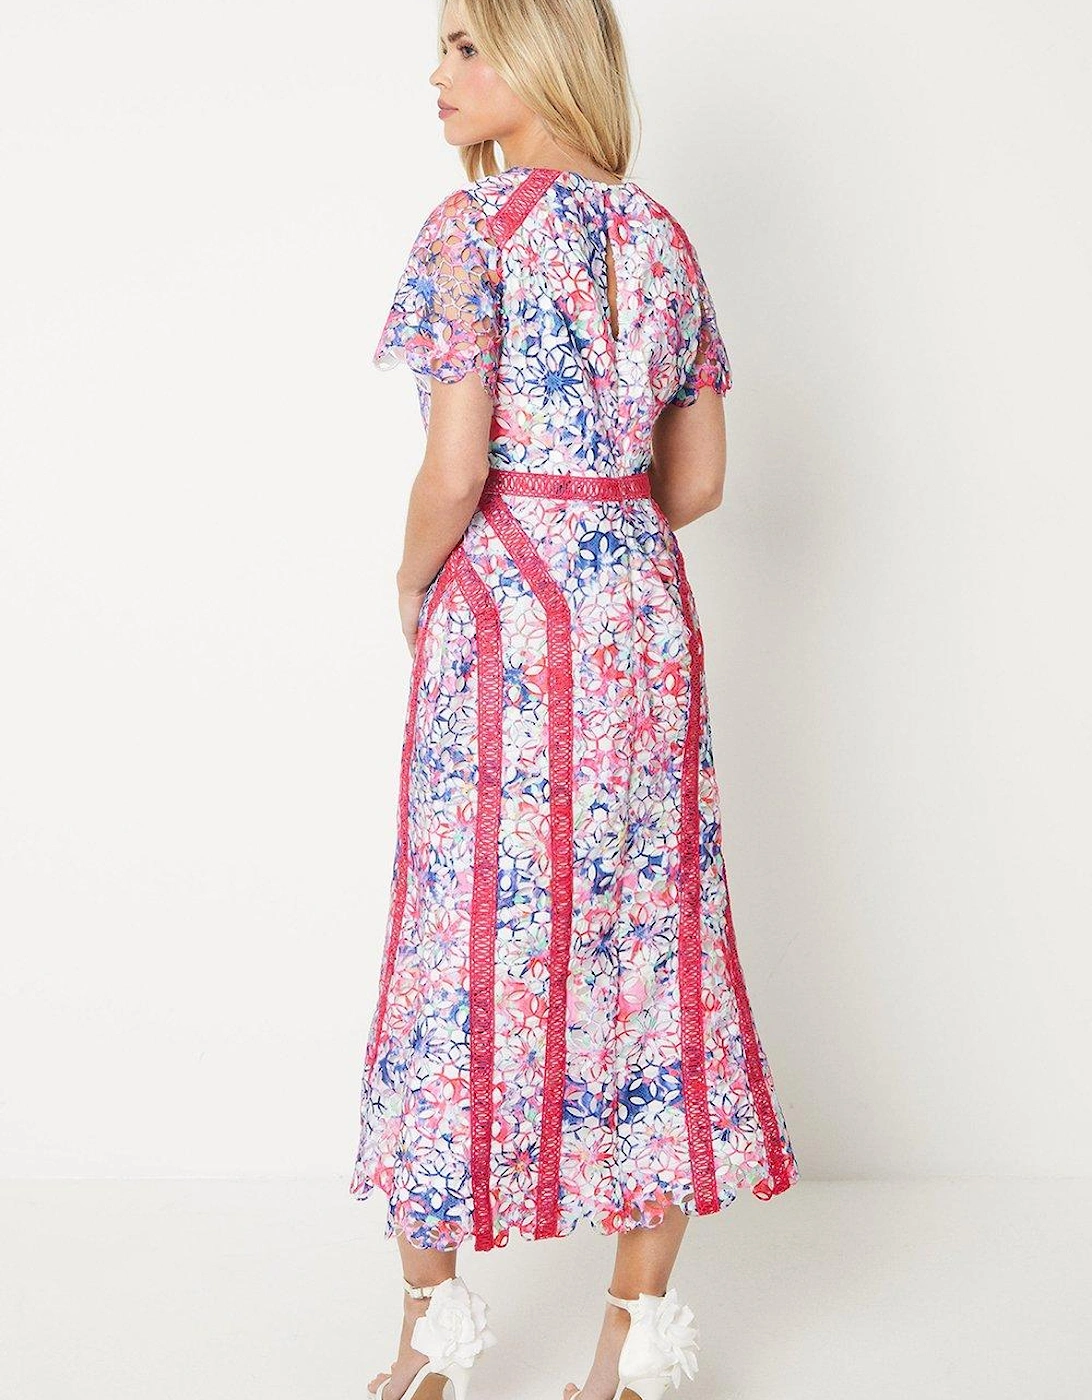 Petite Printed Floral Lace Midi Pencil Dress